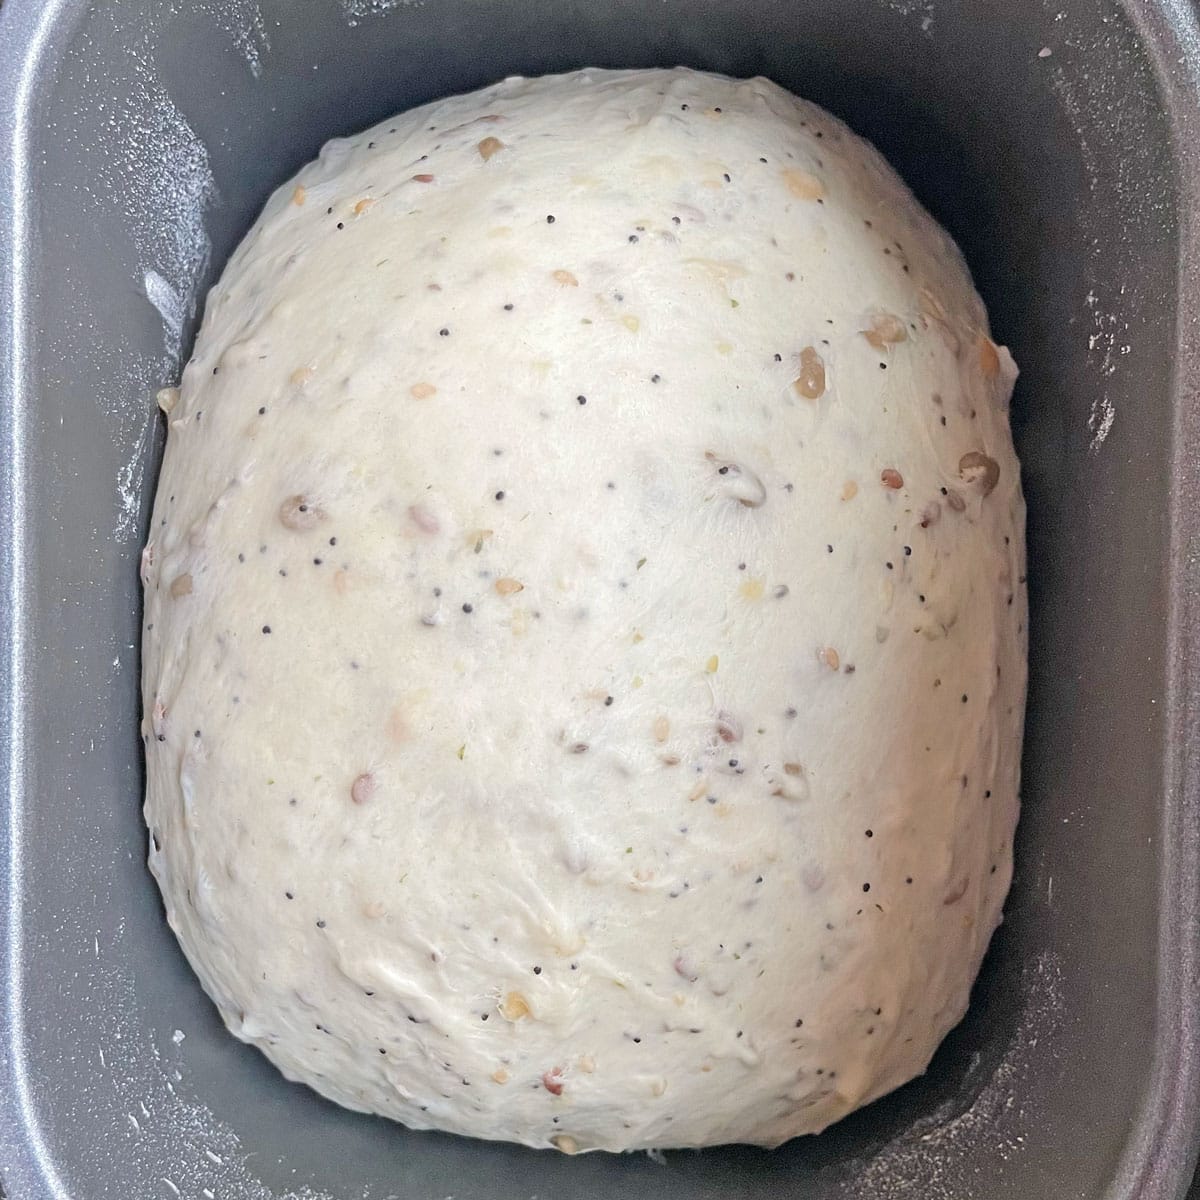 Seed bread dough rise in bread machine pan.